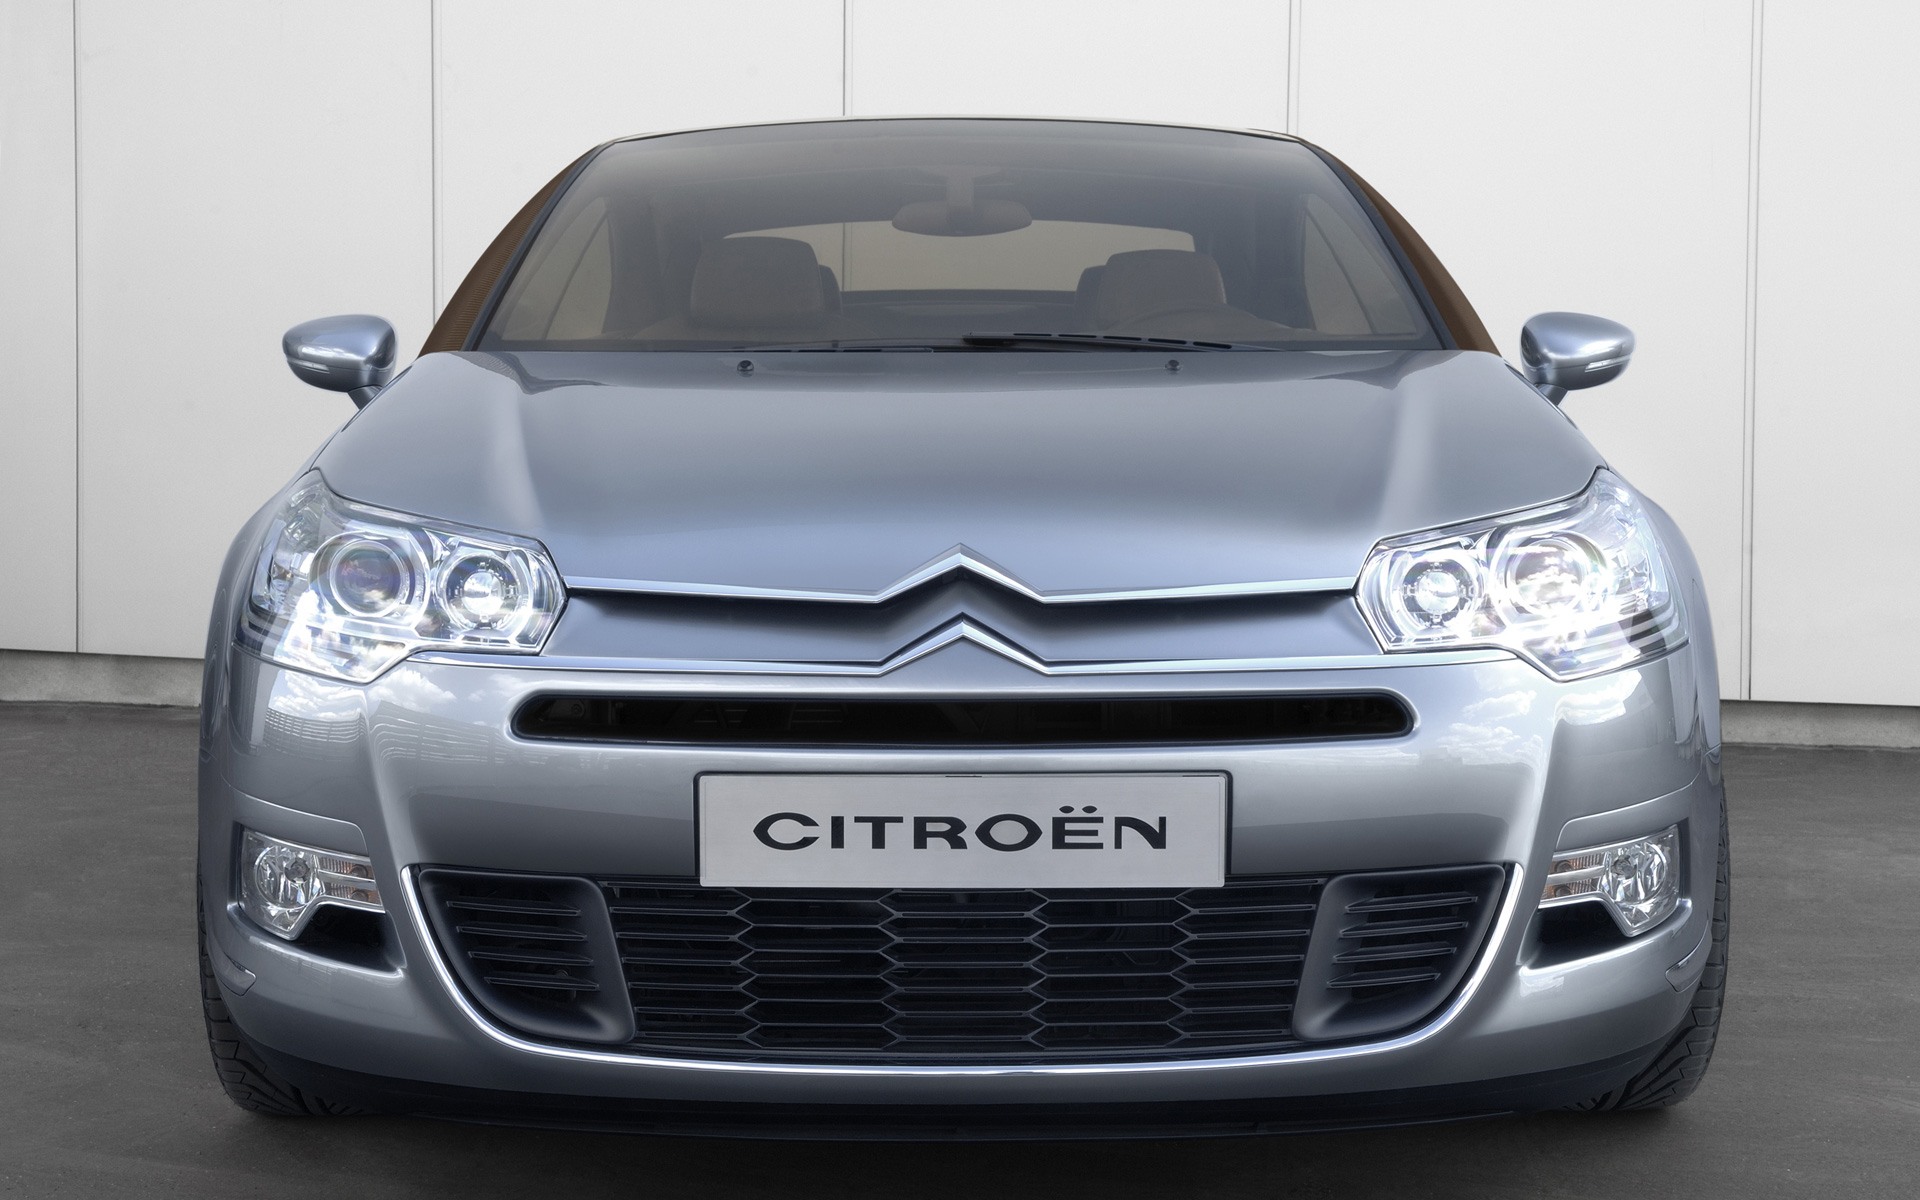 Download High quality Citroen wallpaper / Cars / 1920x1200